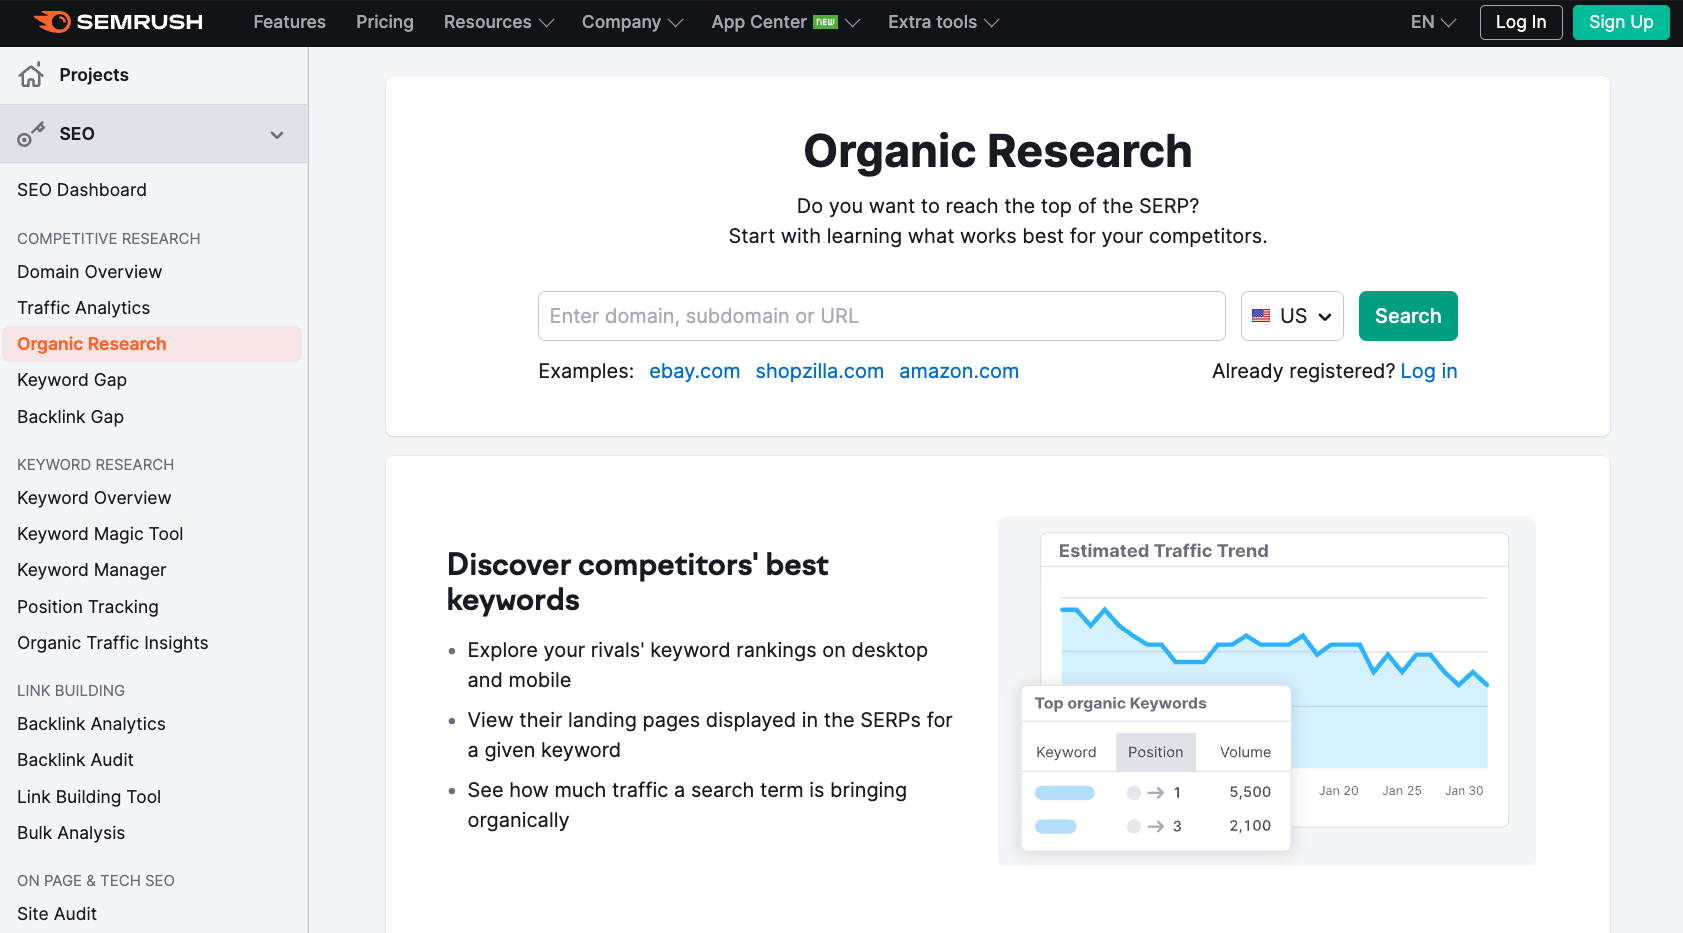 Organic Research by Semrush